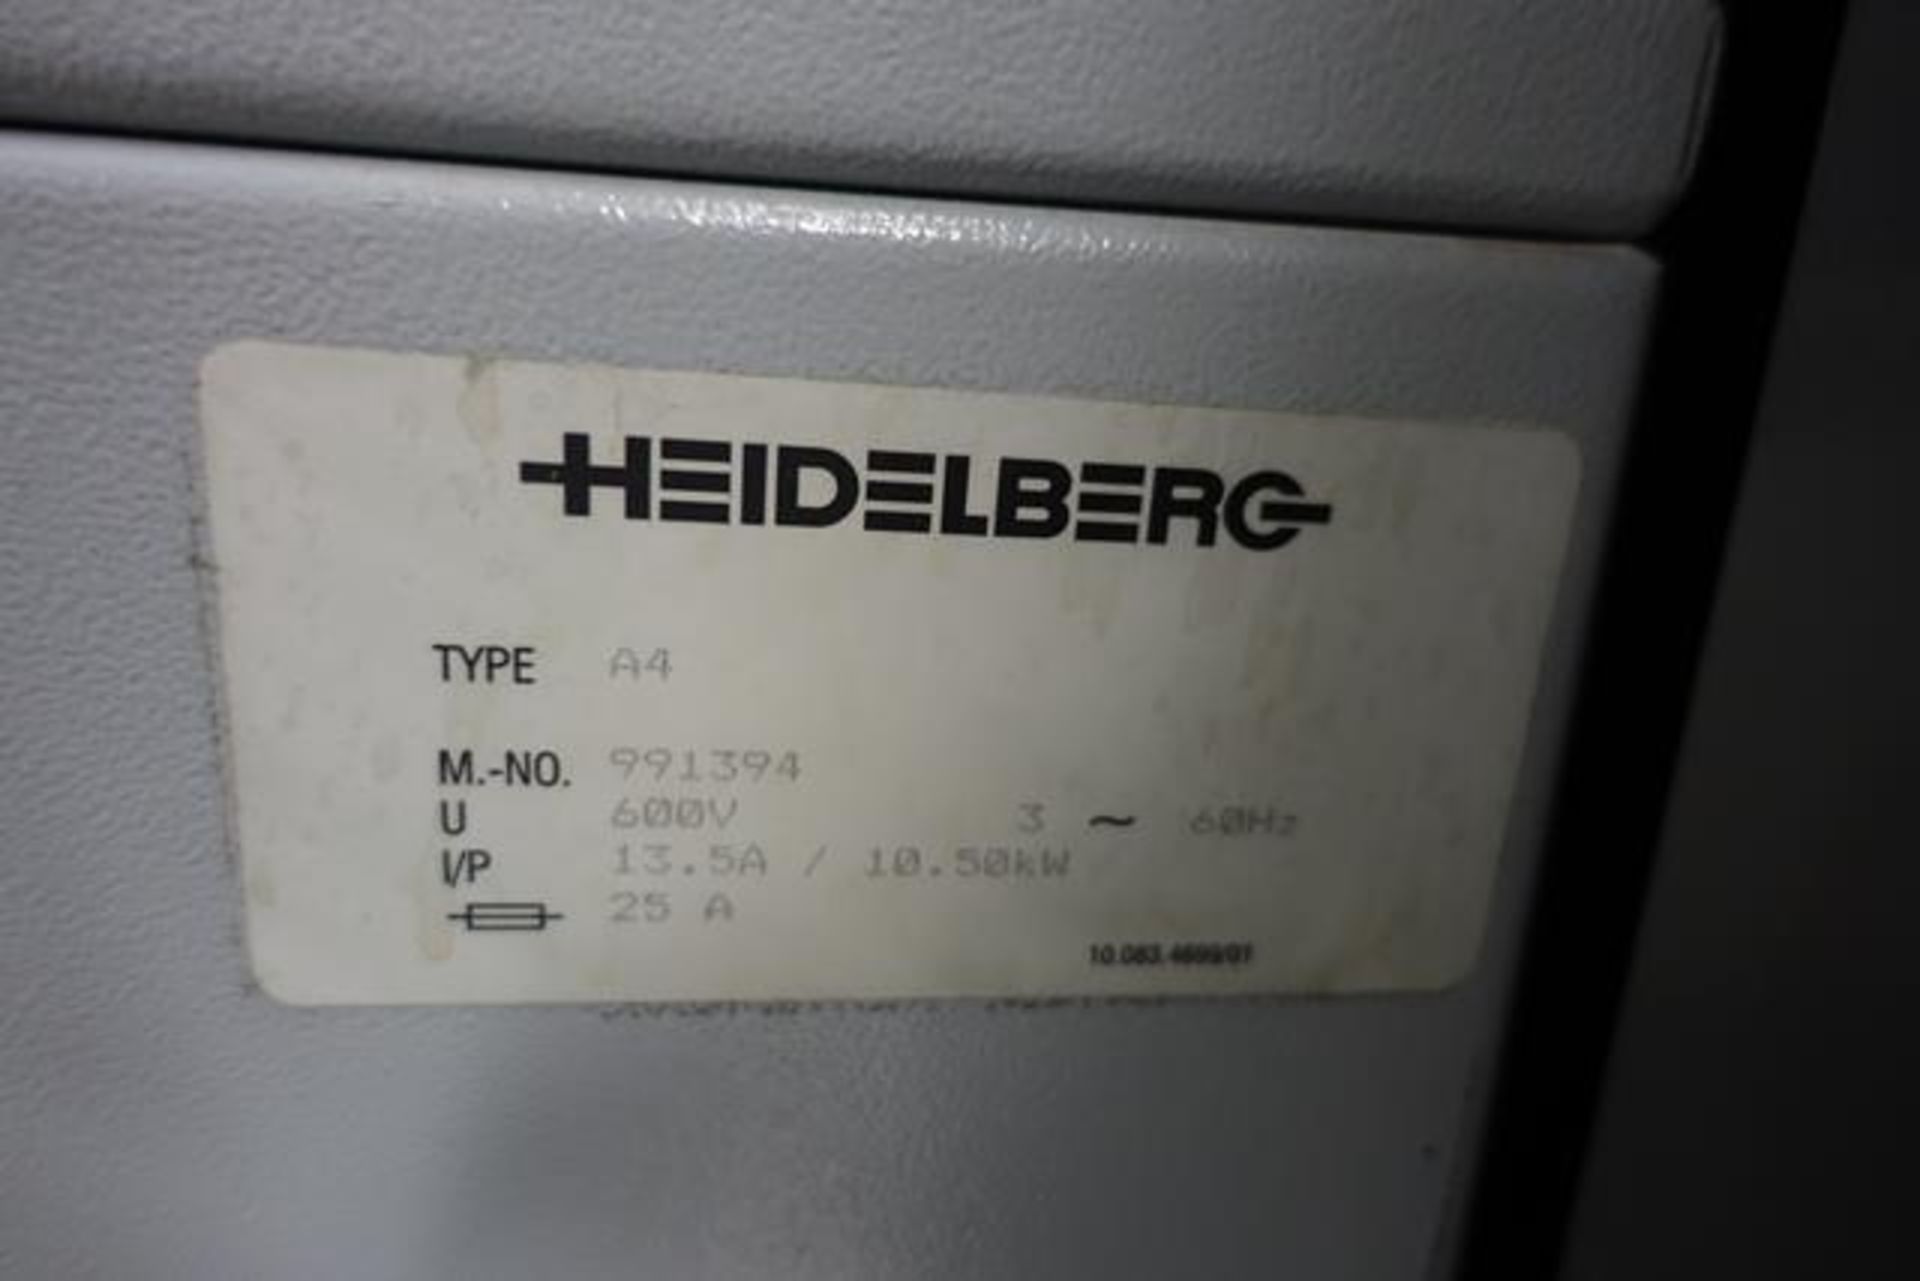 HEIDELBERG, QM-DI-46-4, 4 COLOUR, 18" X 13", DIGITAL OFFSET PRINTER, 2000, 29,205,815 IMPRESSIONS, - Image 14 of 19